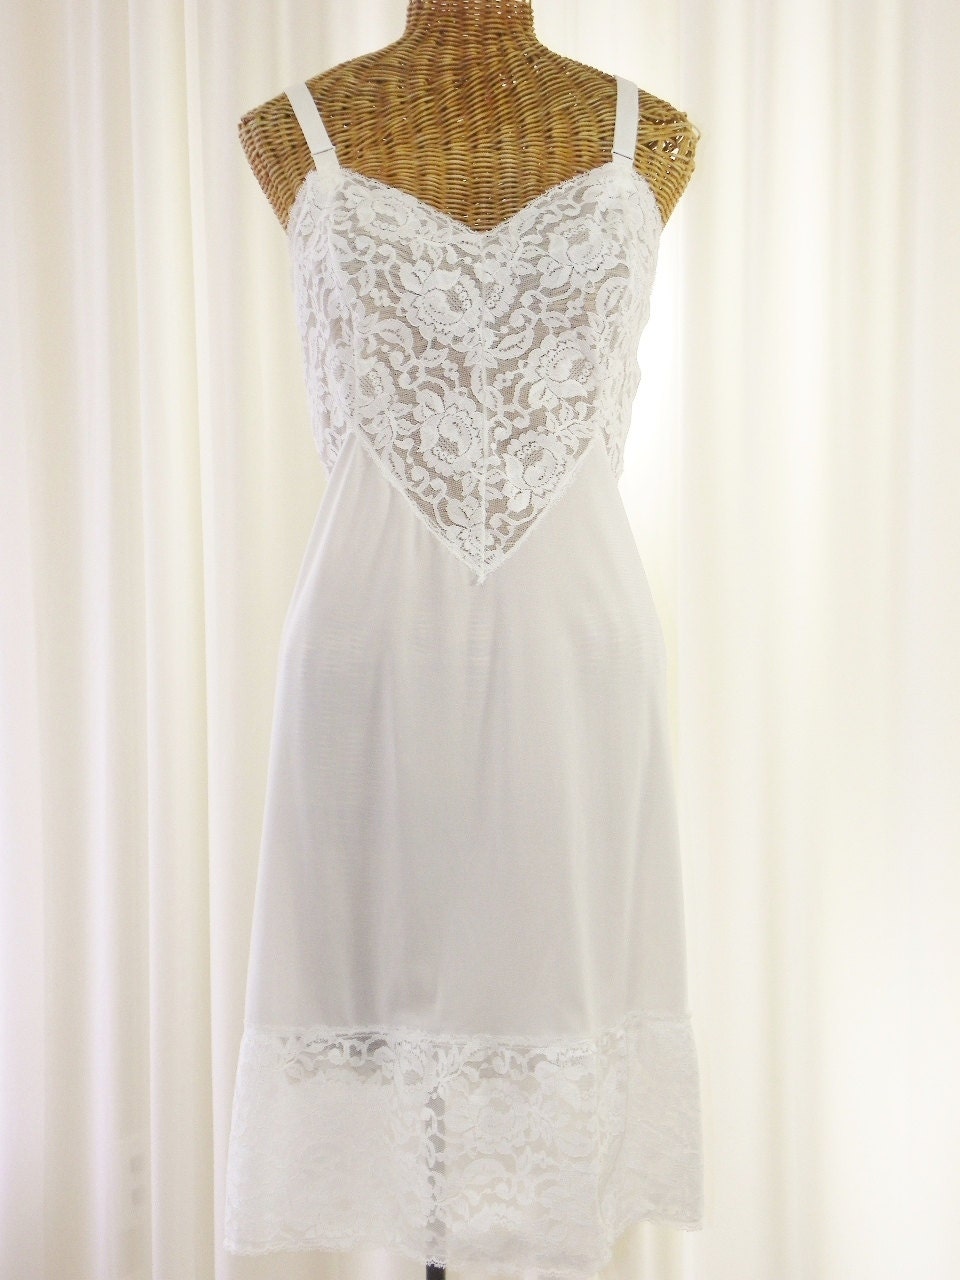 Extraordinary Bridal White Lace Slip Dress by Voilavintagelingerie